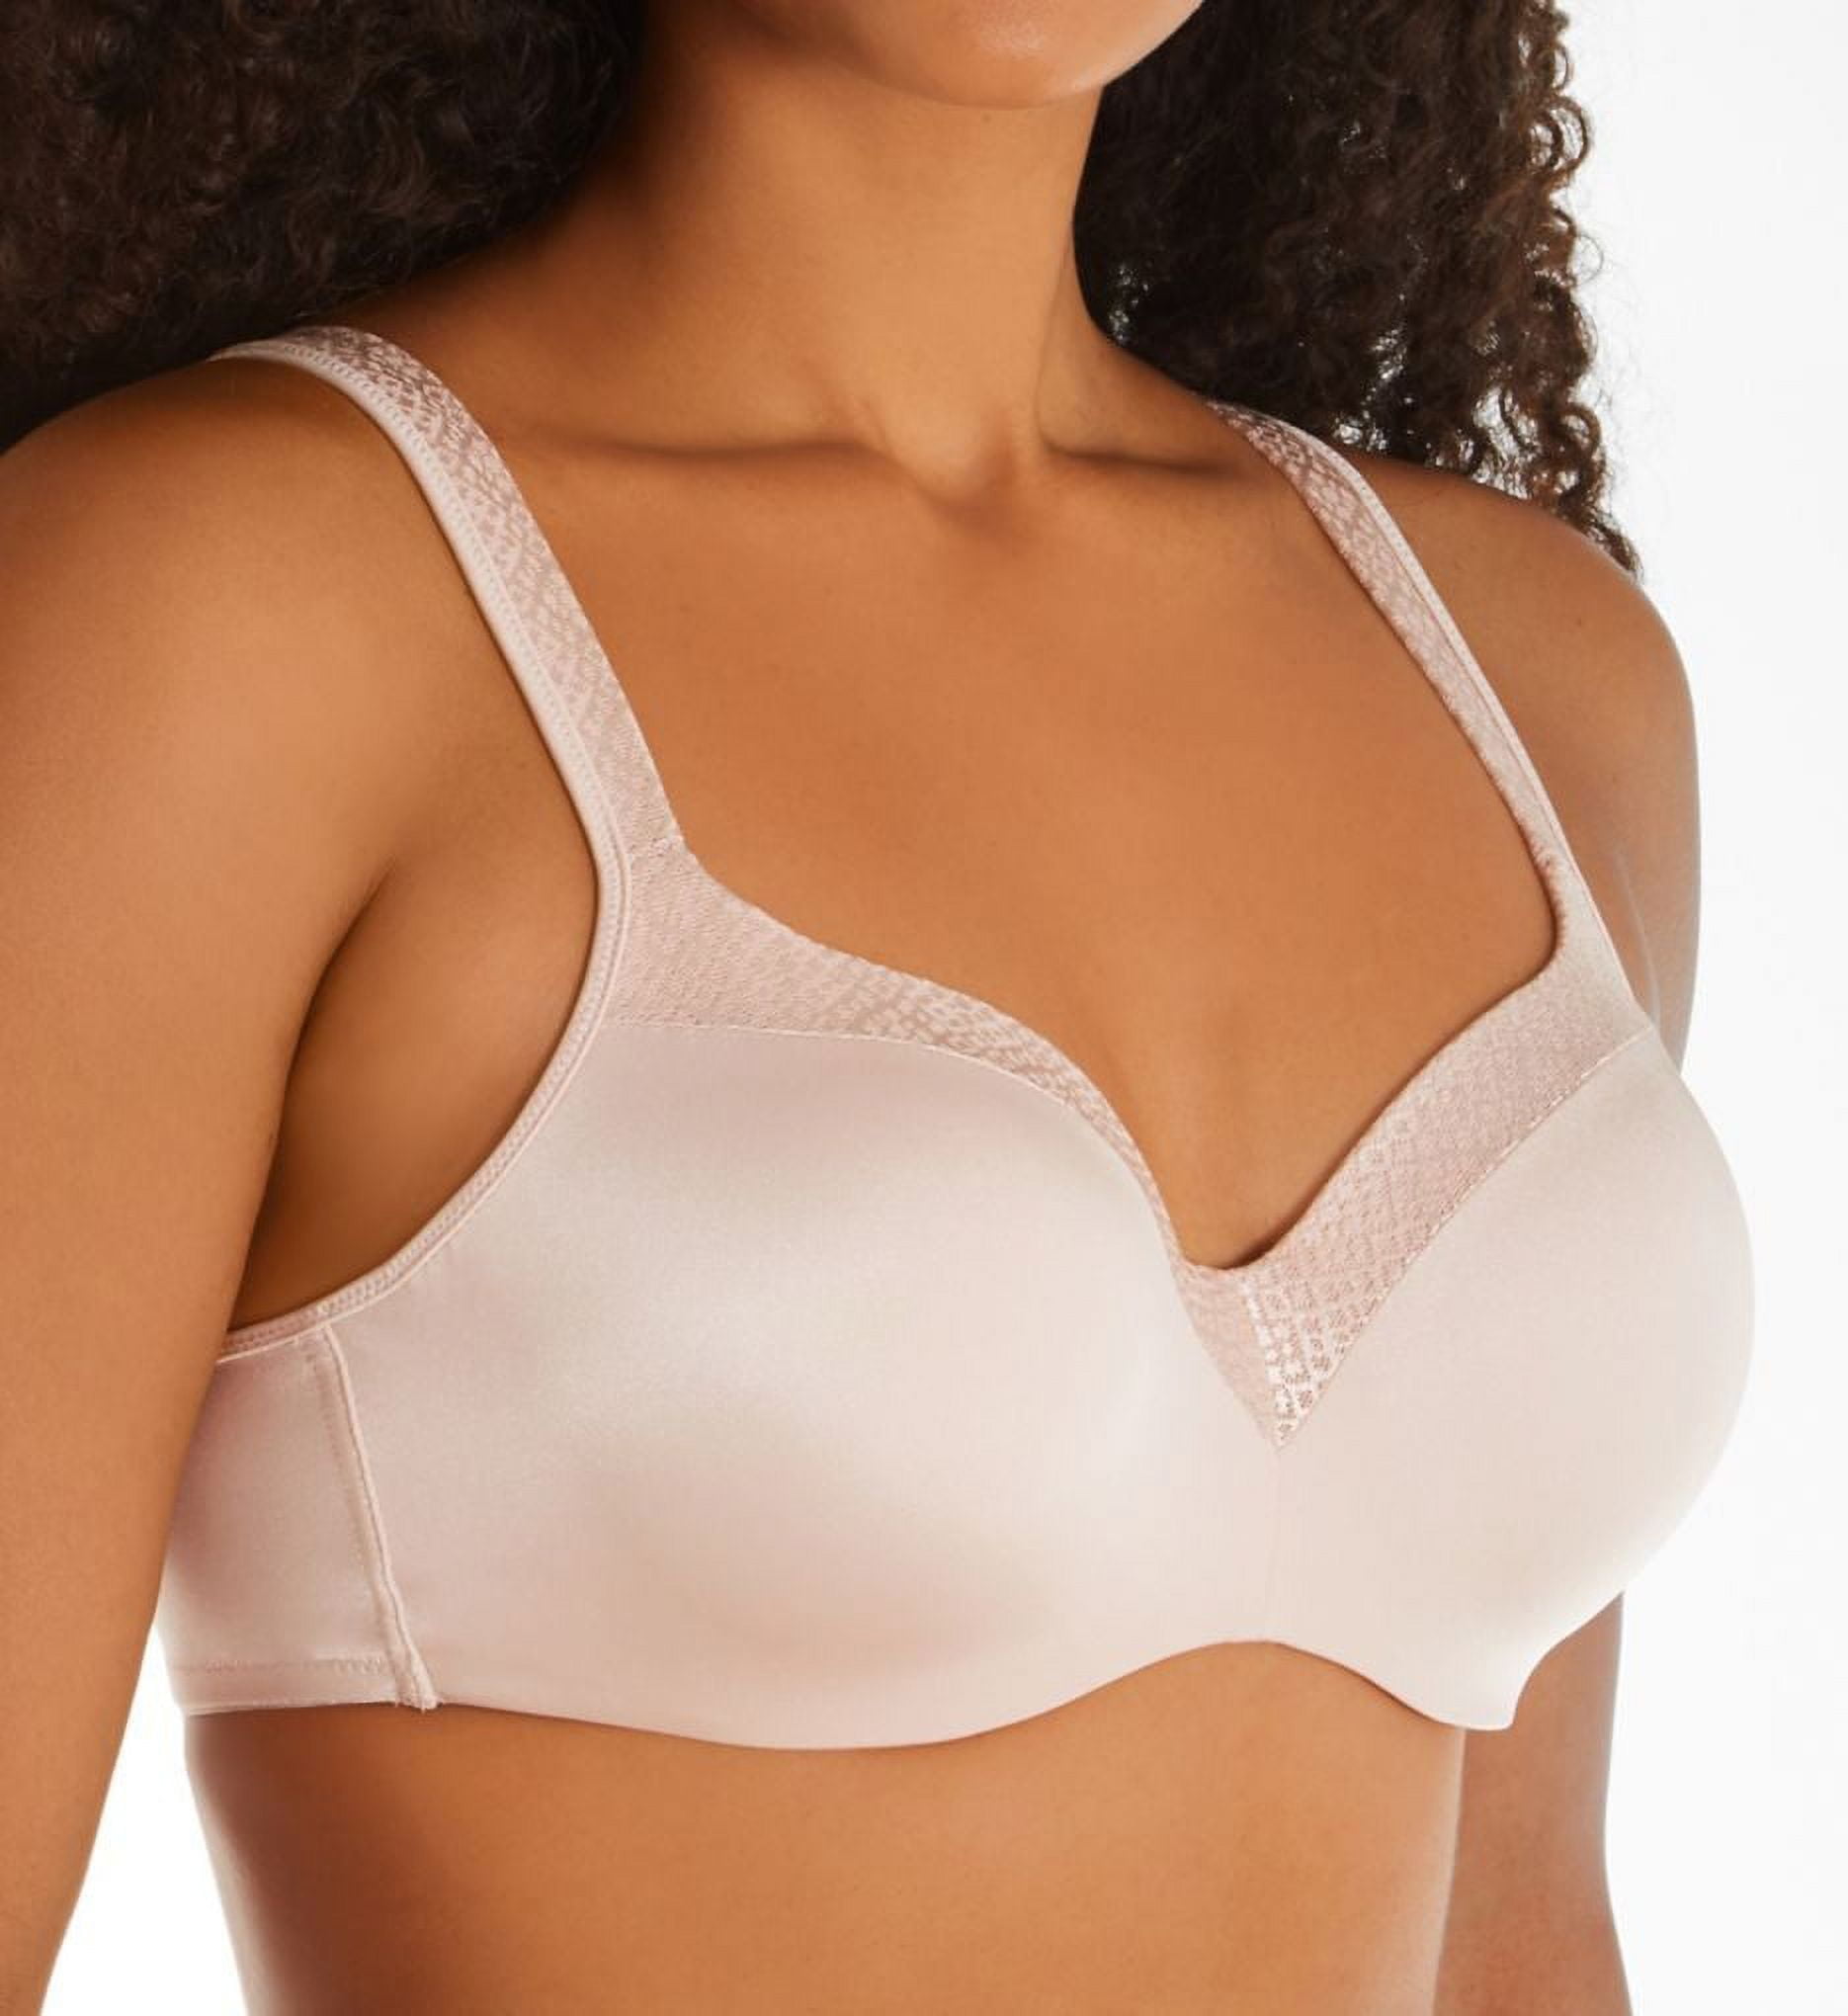 playtex women's secrets undercover slimming underwire bra white jacquard 36c  36c ju 